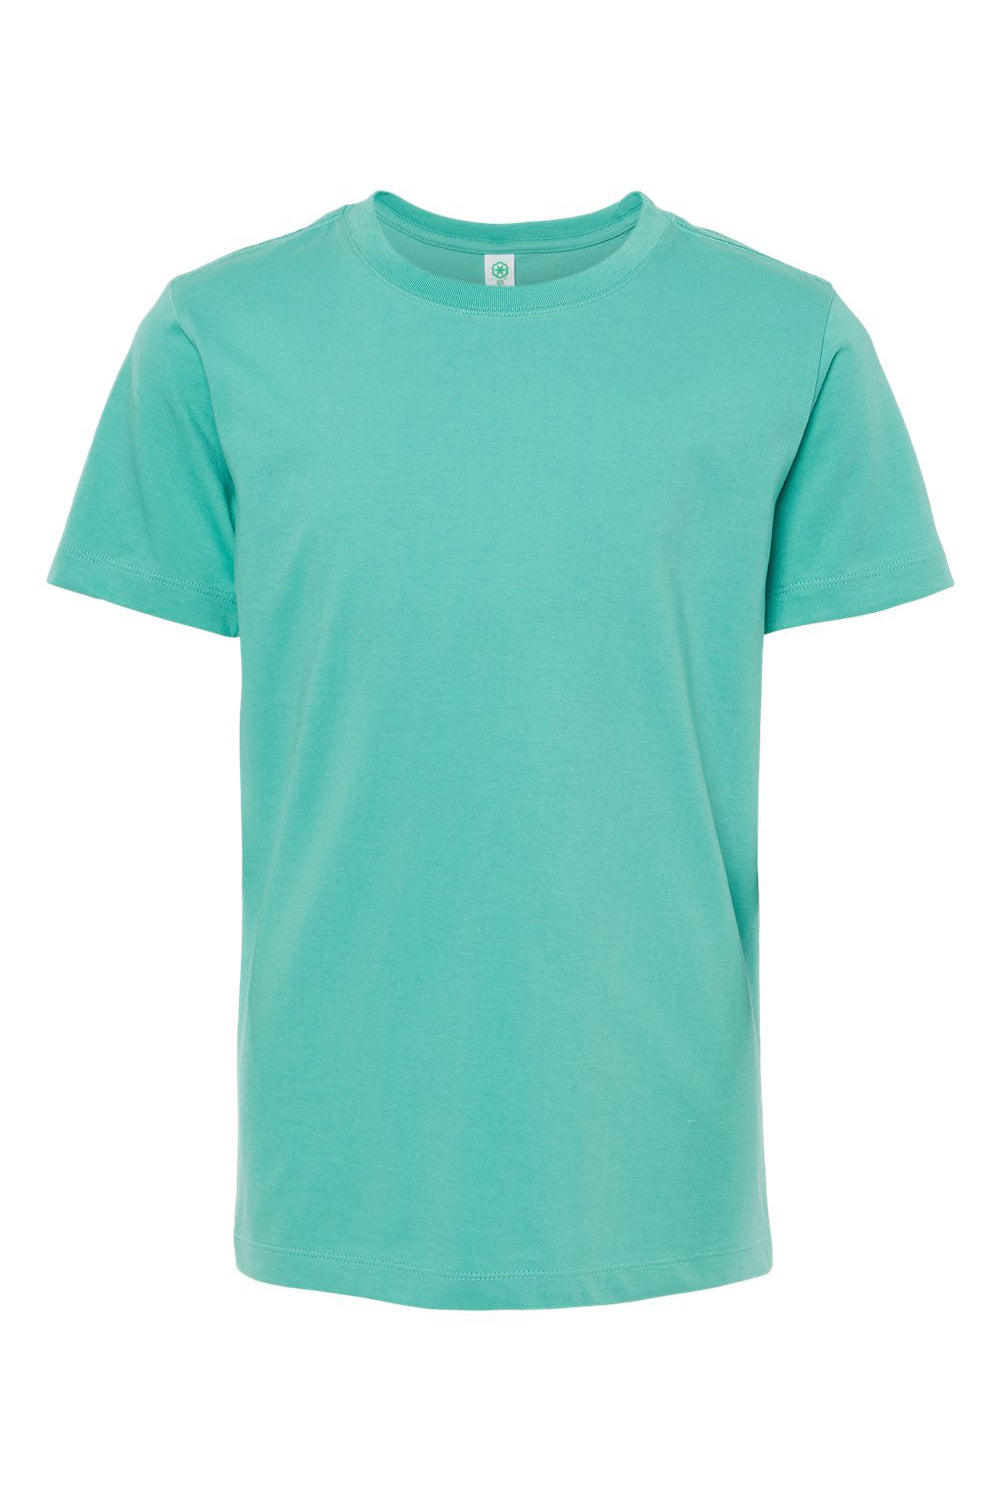 SoftShirts 402 Youth Organic Short Sleeve Crewneck T-Shirt Seaform Green Flat Front